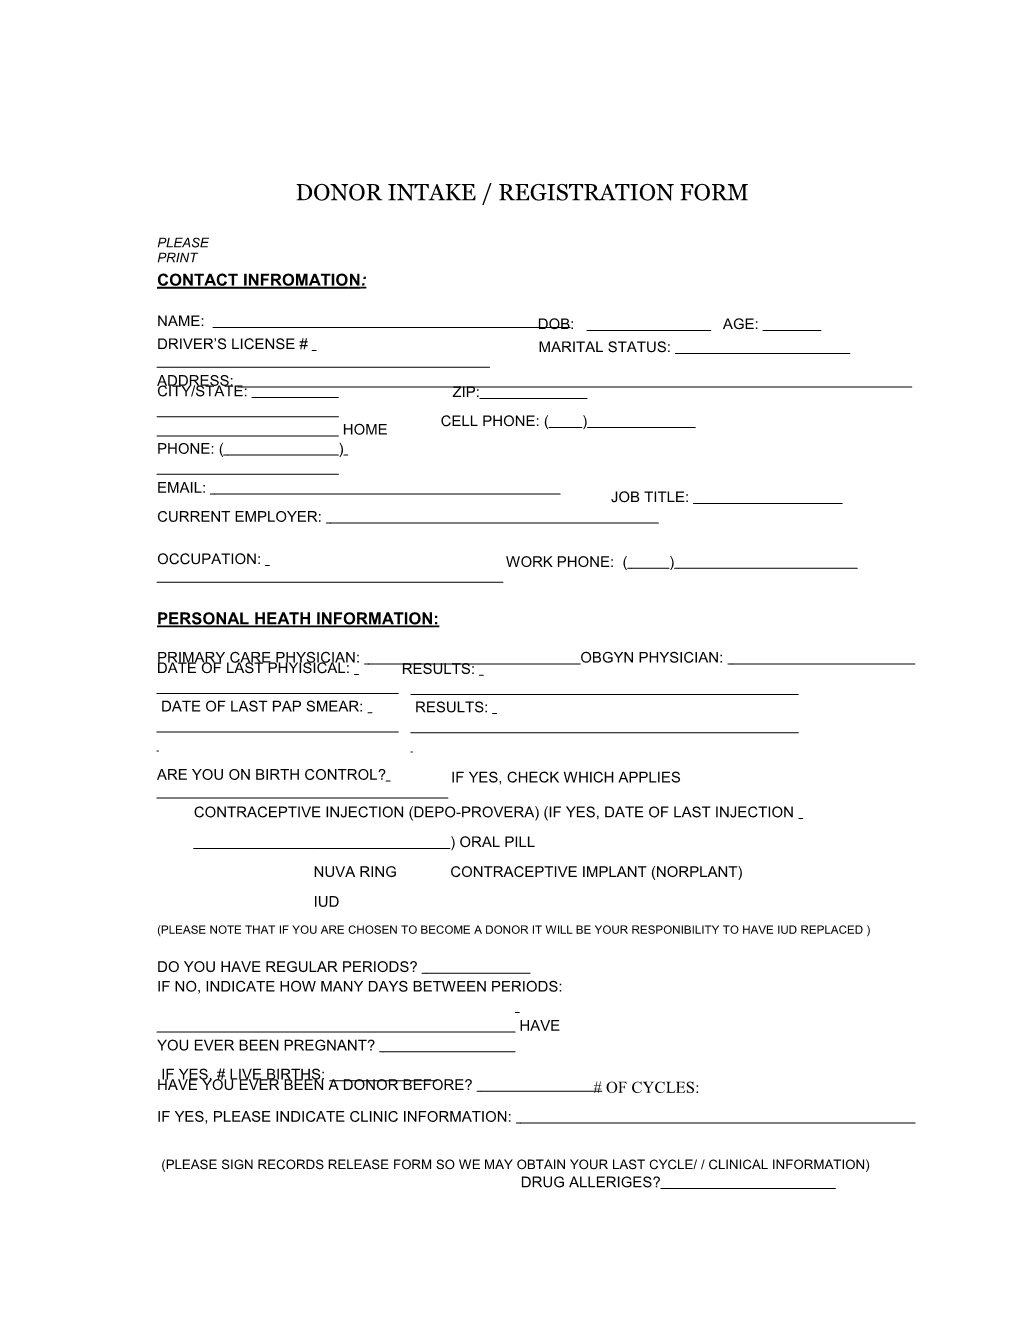 Donorintake/Registrationform